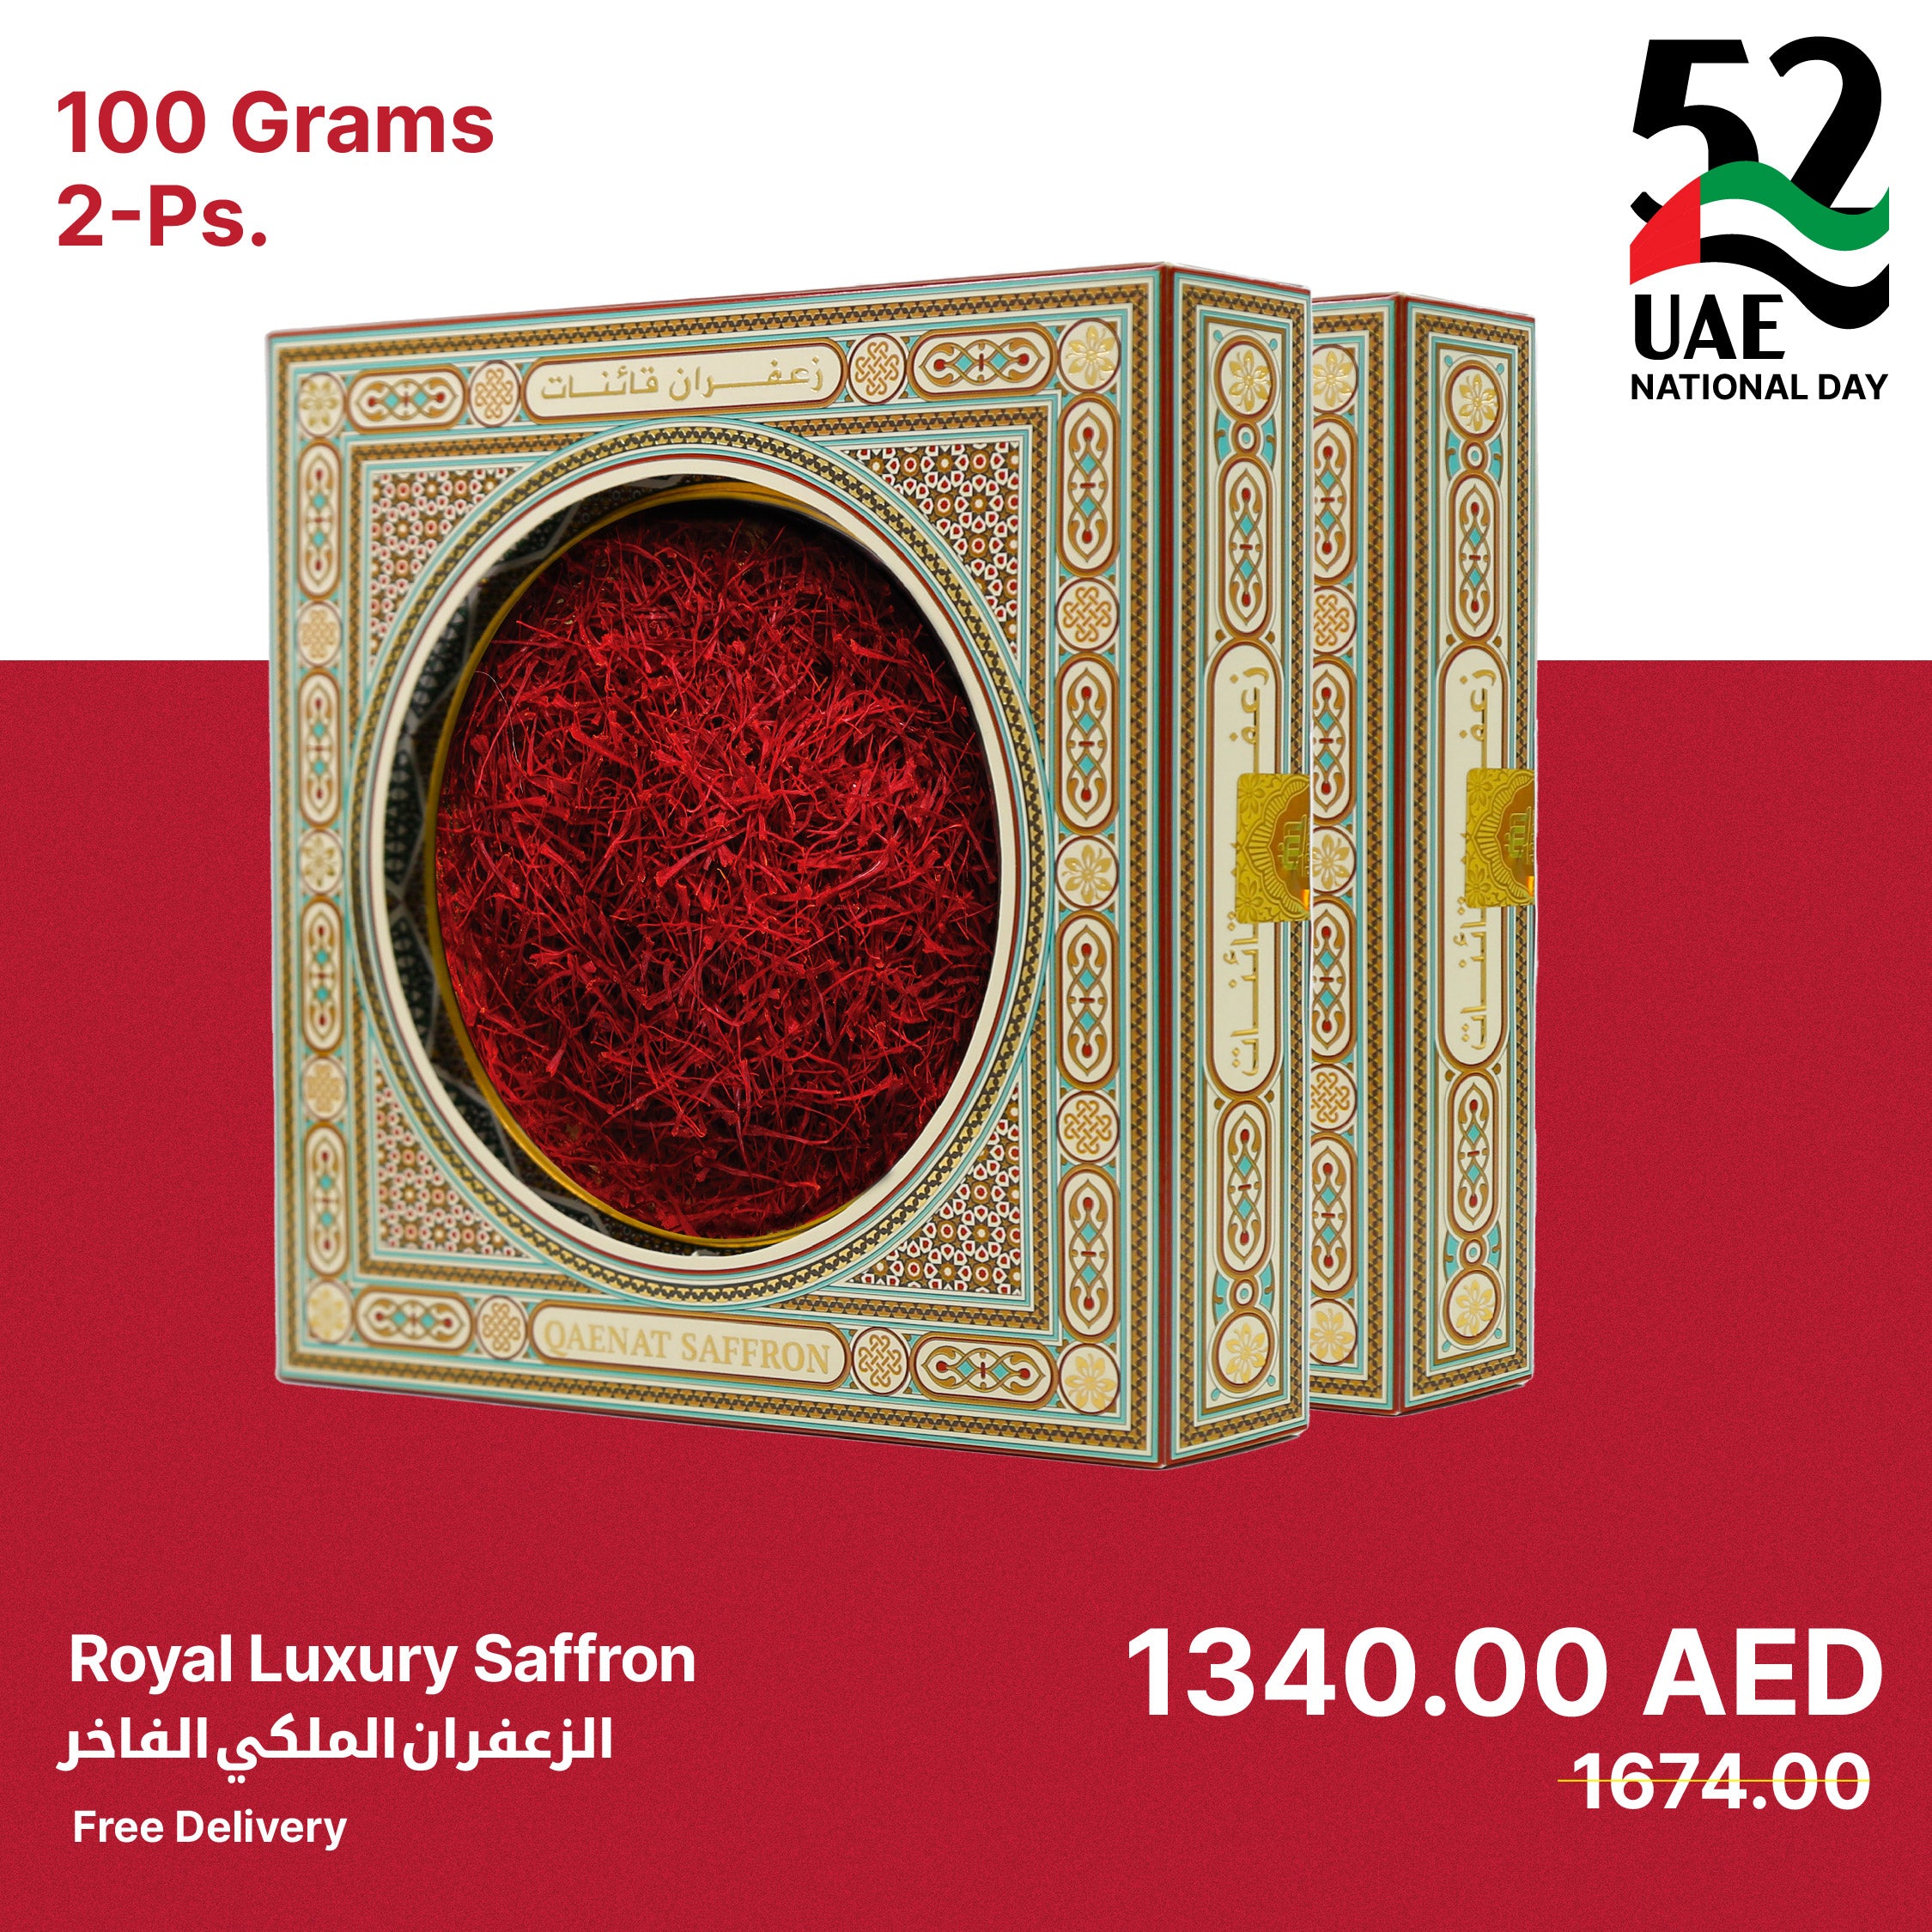 Royal Luxury Saffron (100 g * 2 pcs)